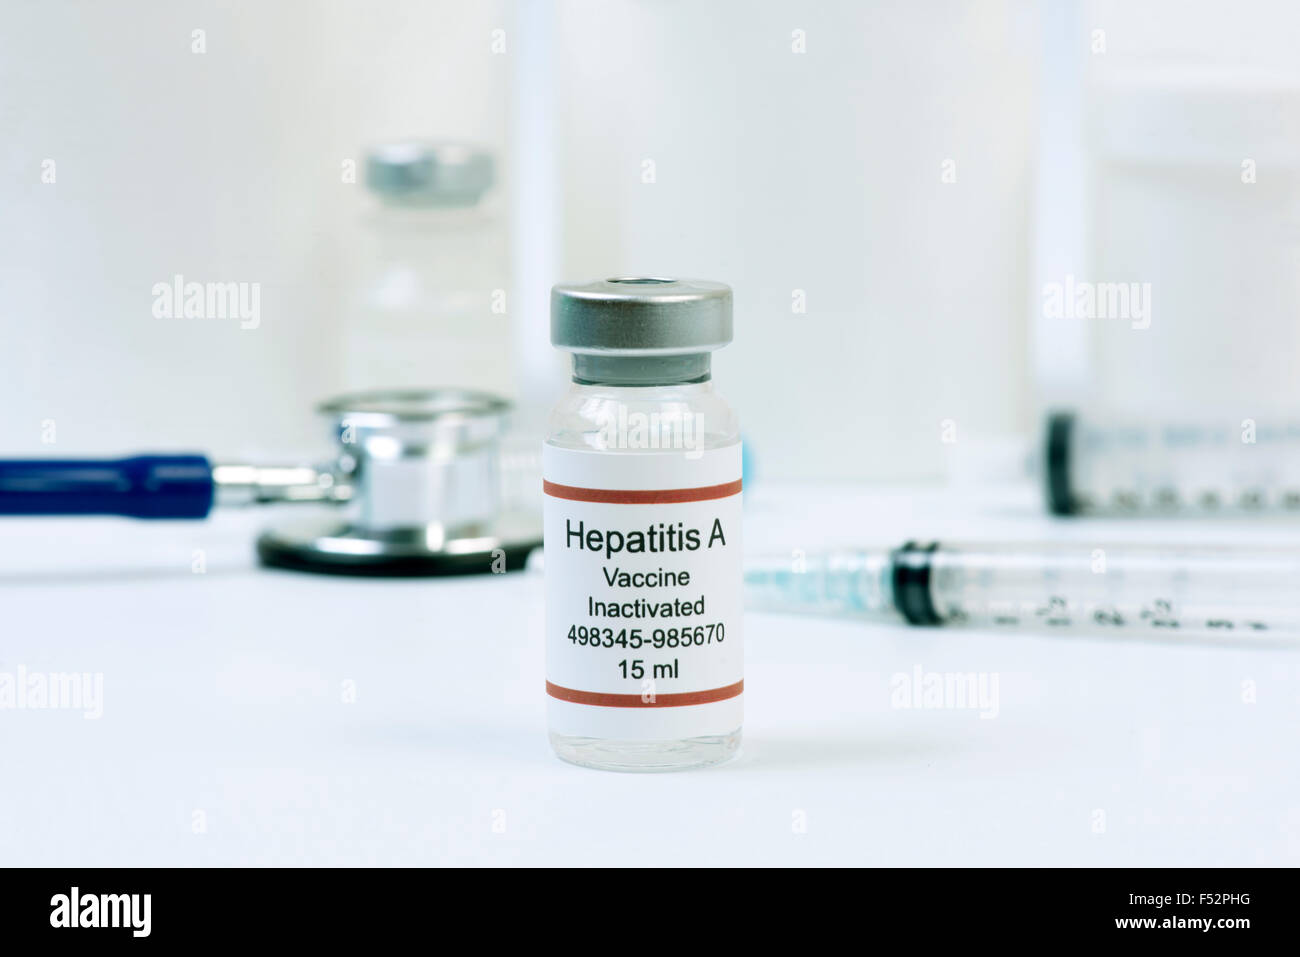 Hepatitis A vaccine vial and stethoscope. Stock Photo